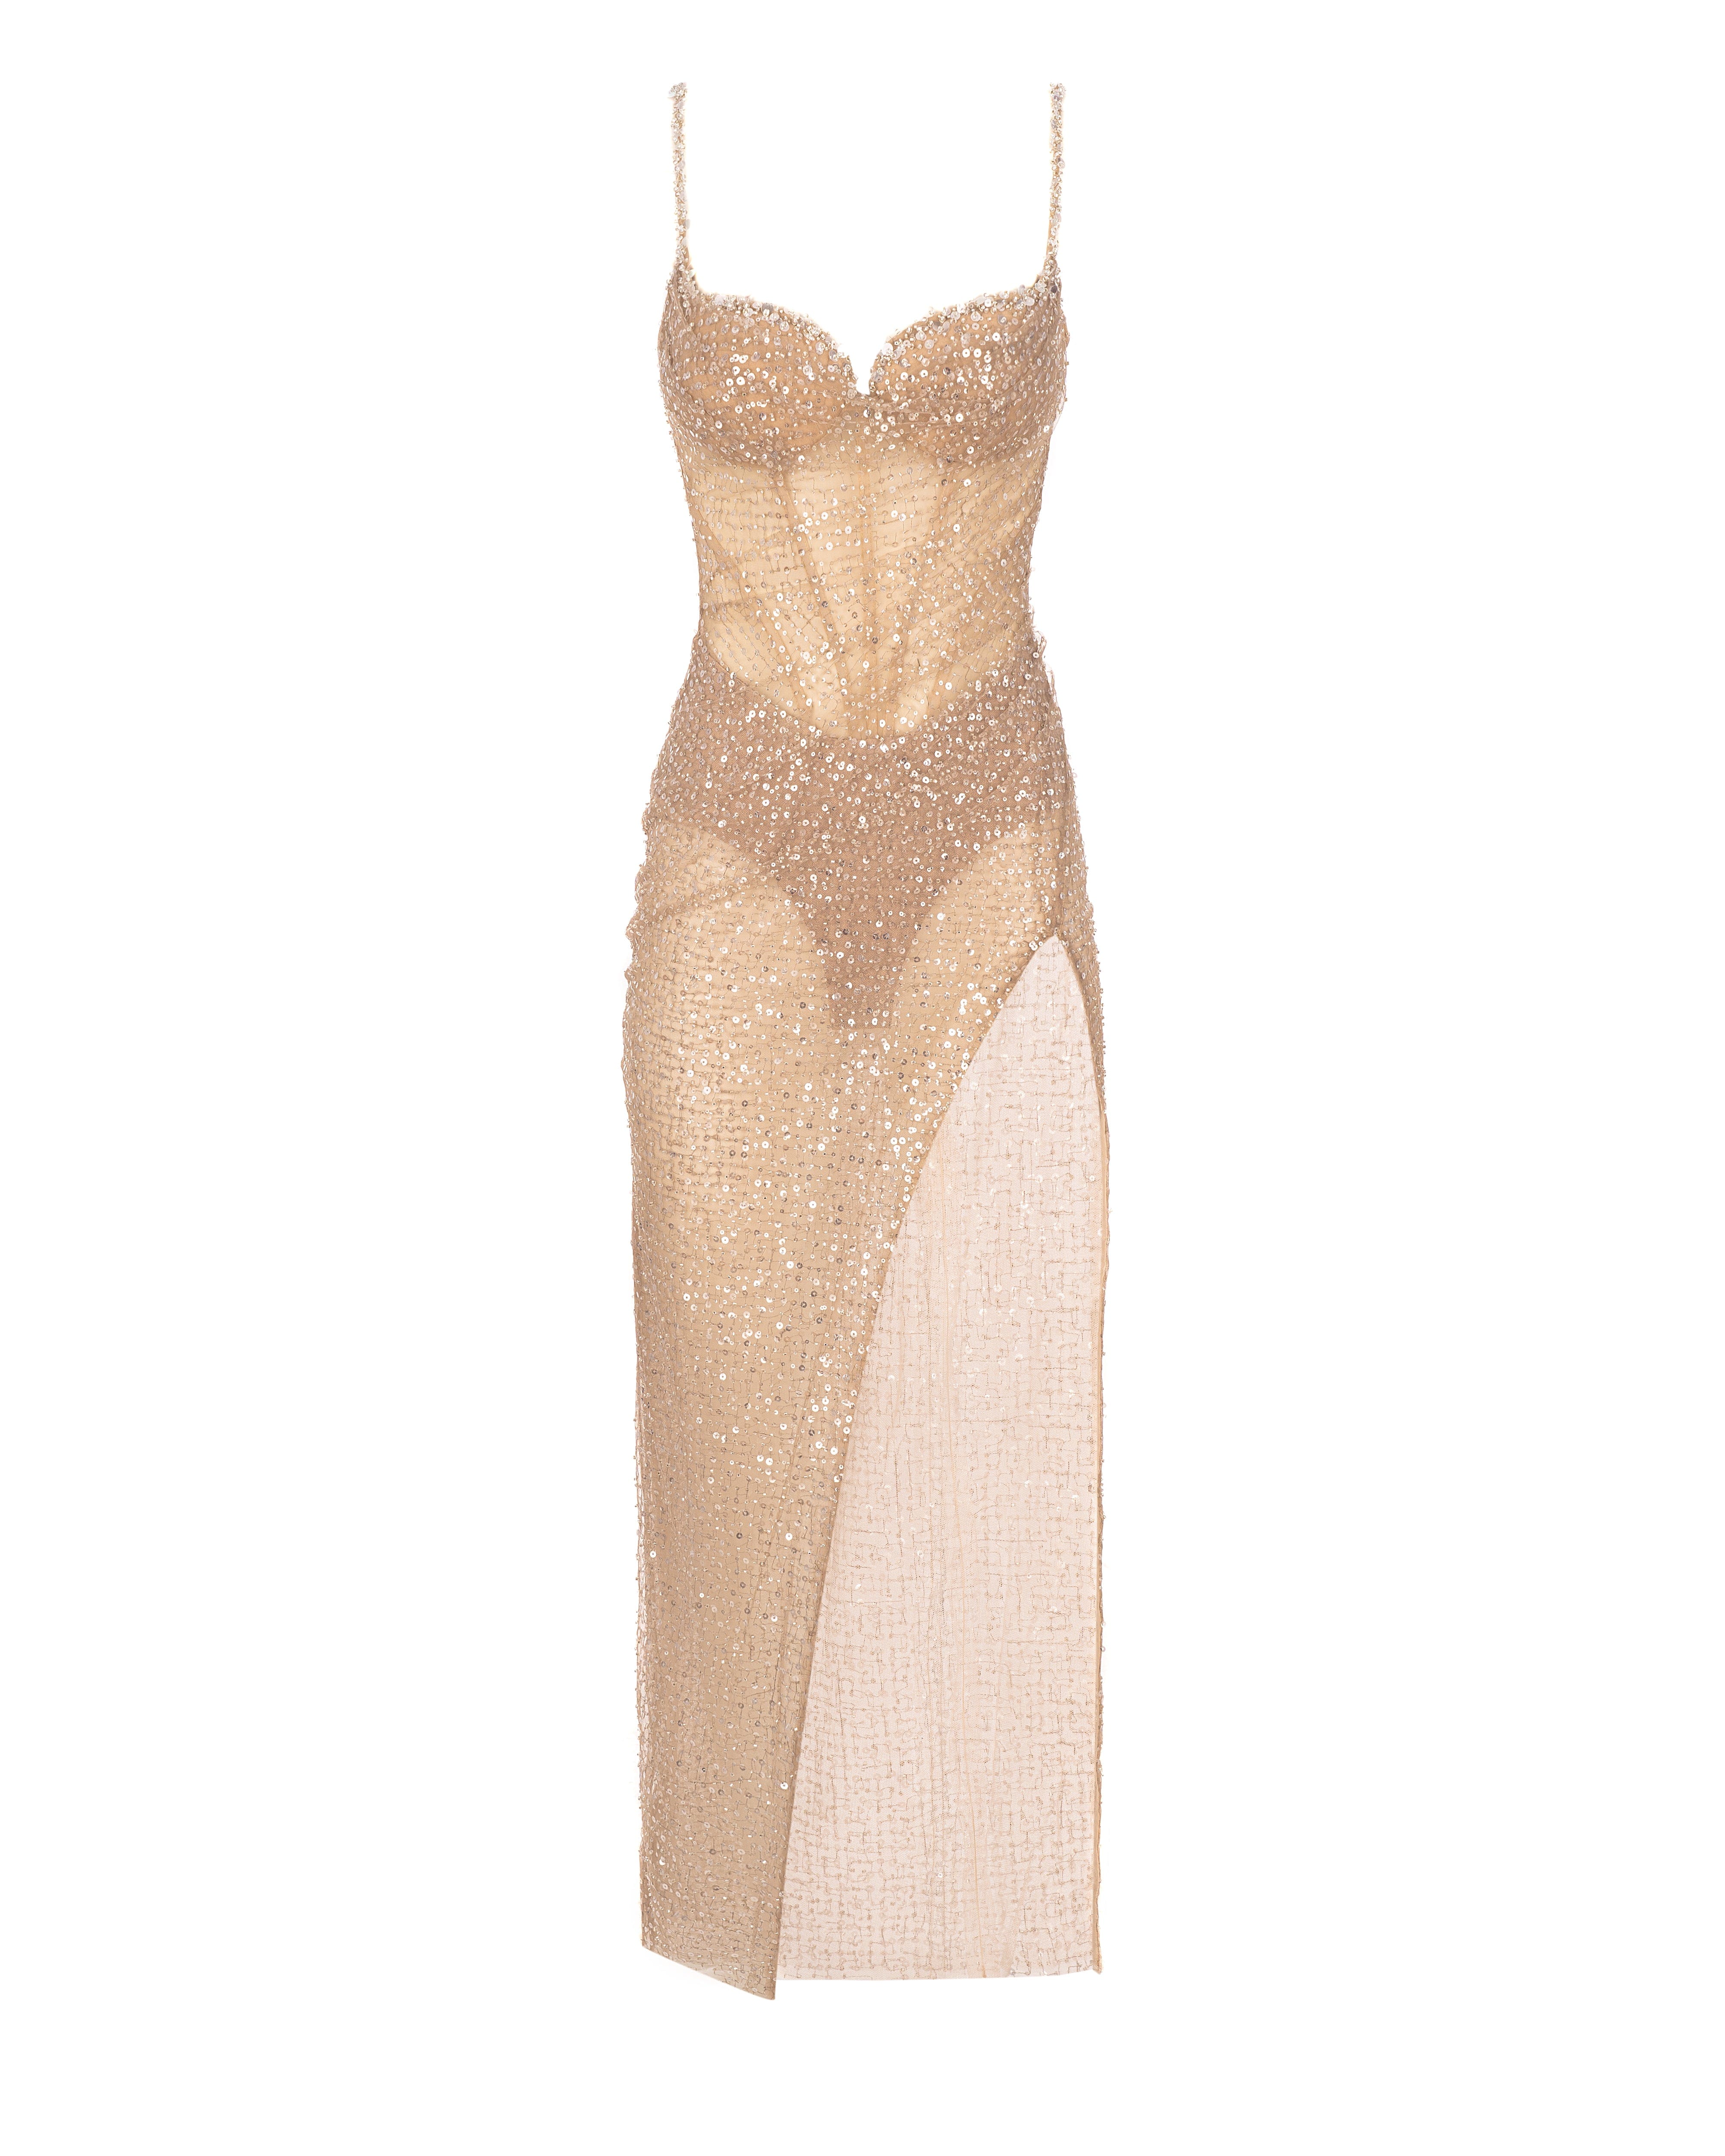 Sensational champagne gold crystal-embellished maxi dress on spaghetti straps